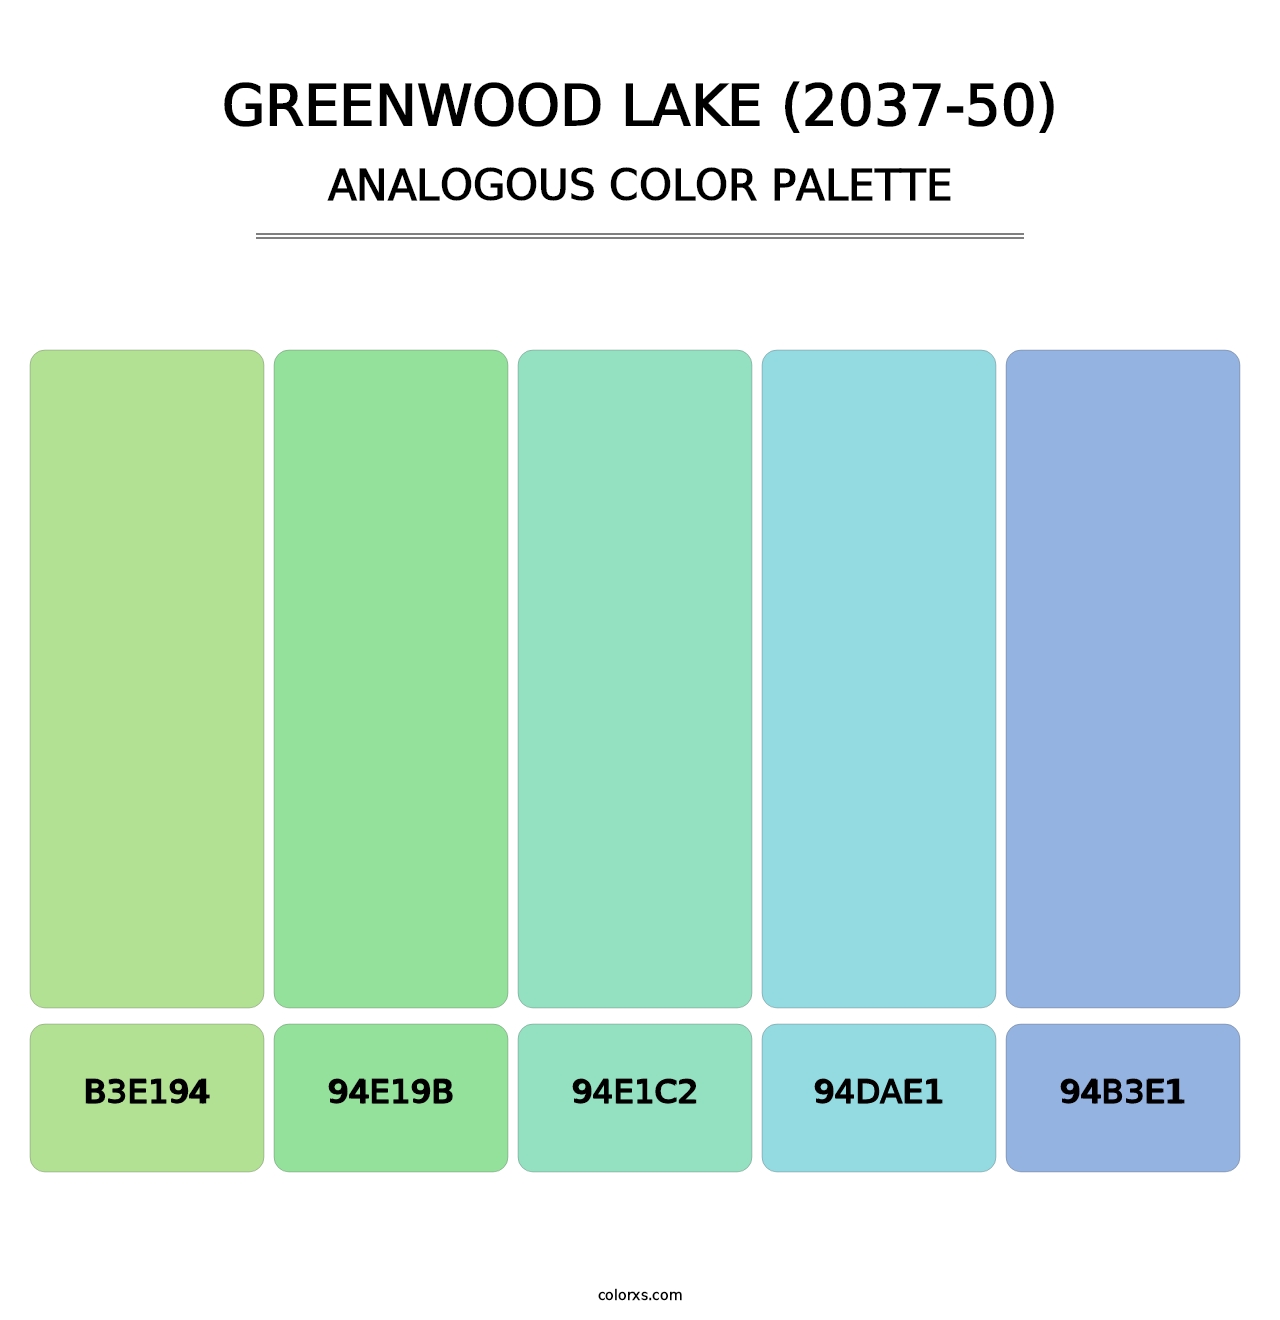 Greenwood Lake (2037-50) - Analogous Color Palette